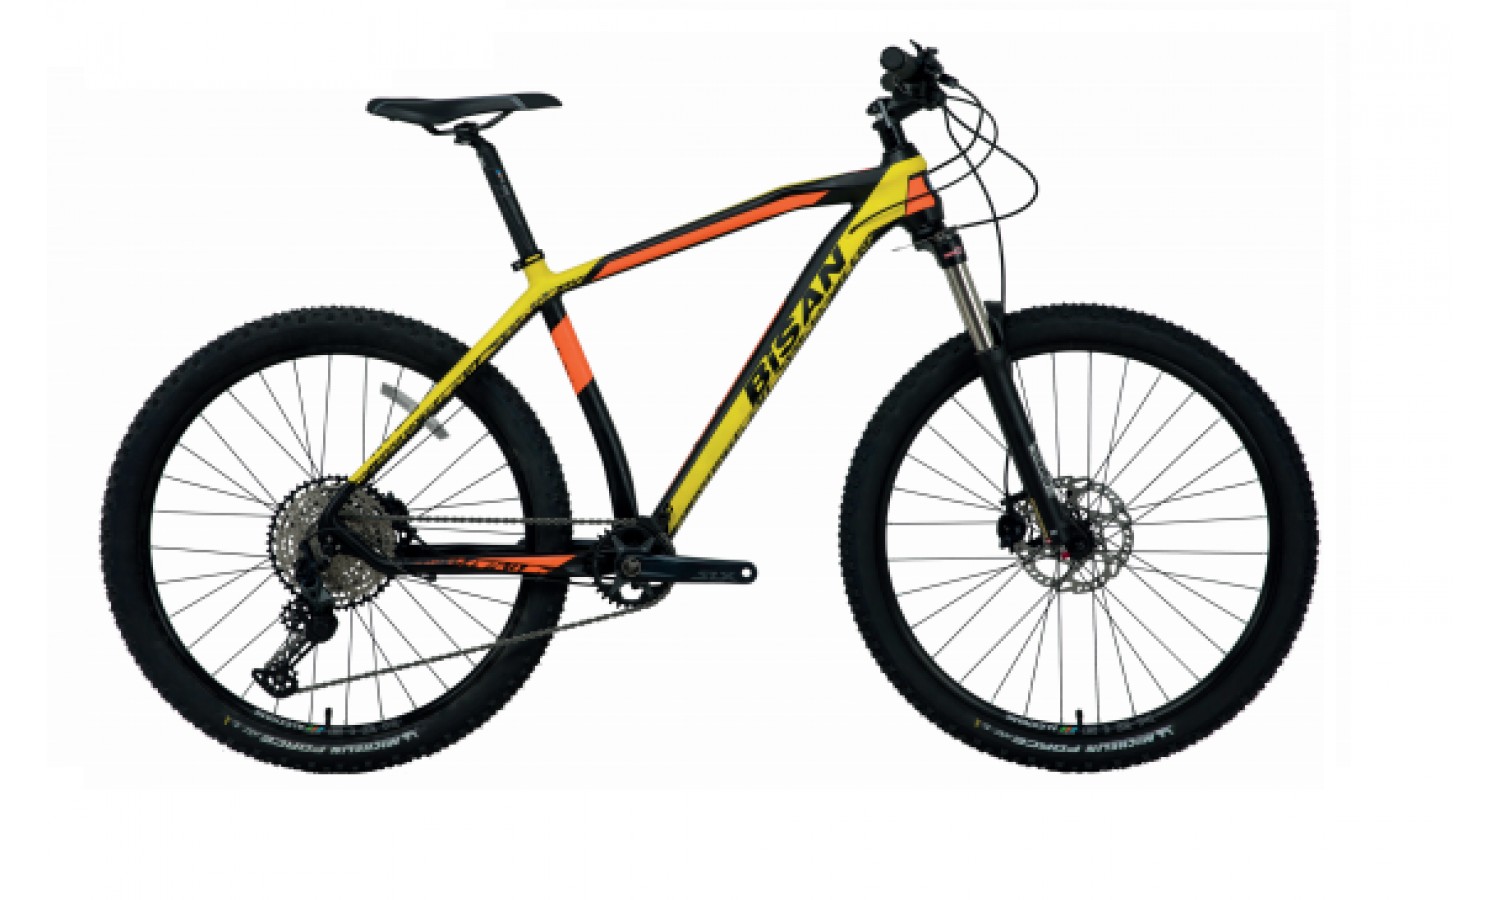 Bisan Mtx 7800 29 Jant Hd Dağ Bisikleti Slx (Mat Siyah Sarı)